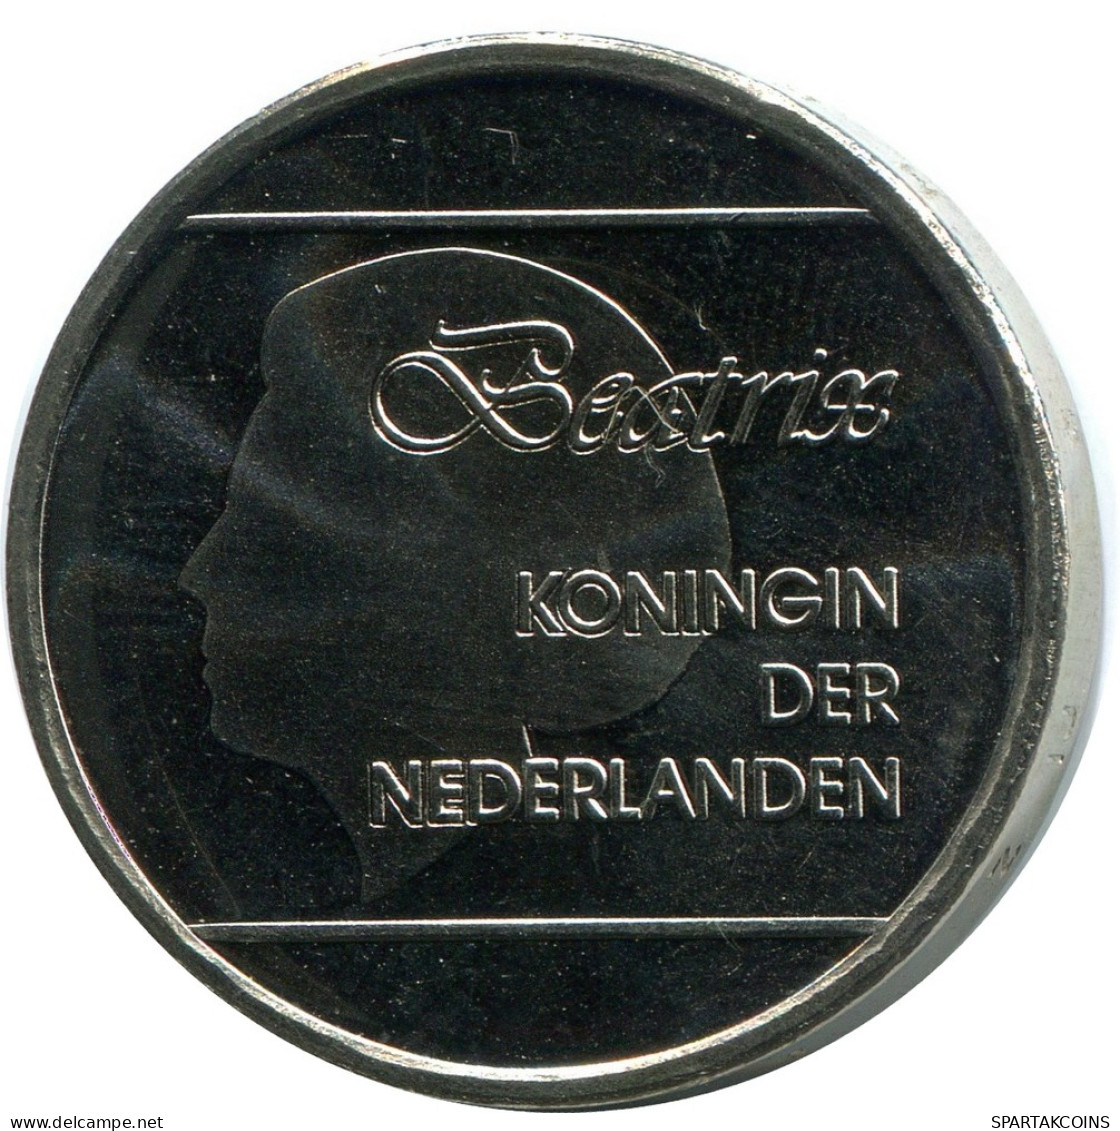 1 FLORIN 1986 ARUBA Coin (From BU Mint Set) #AH023.U - Aruba